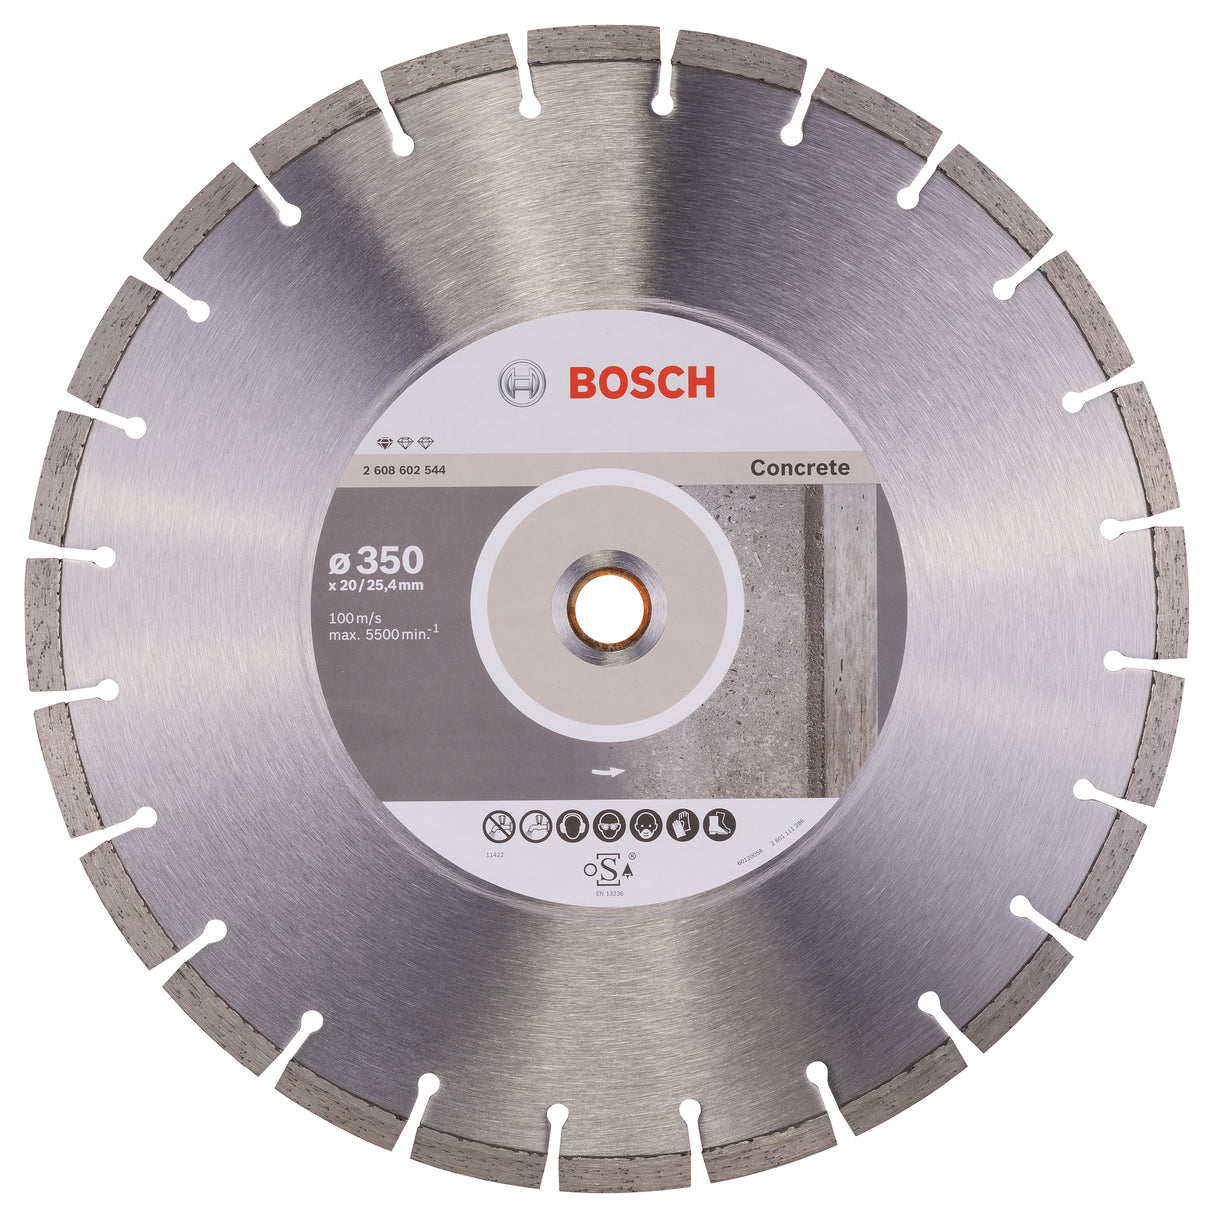 Bosch Professional Diamond Cutting Disc for Concrete - 350 x 20/25, 40 x 2.8 x 10mm